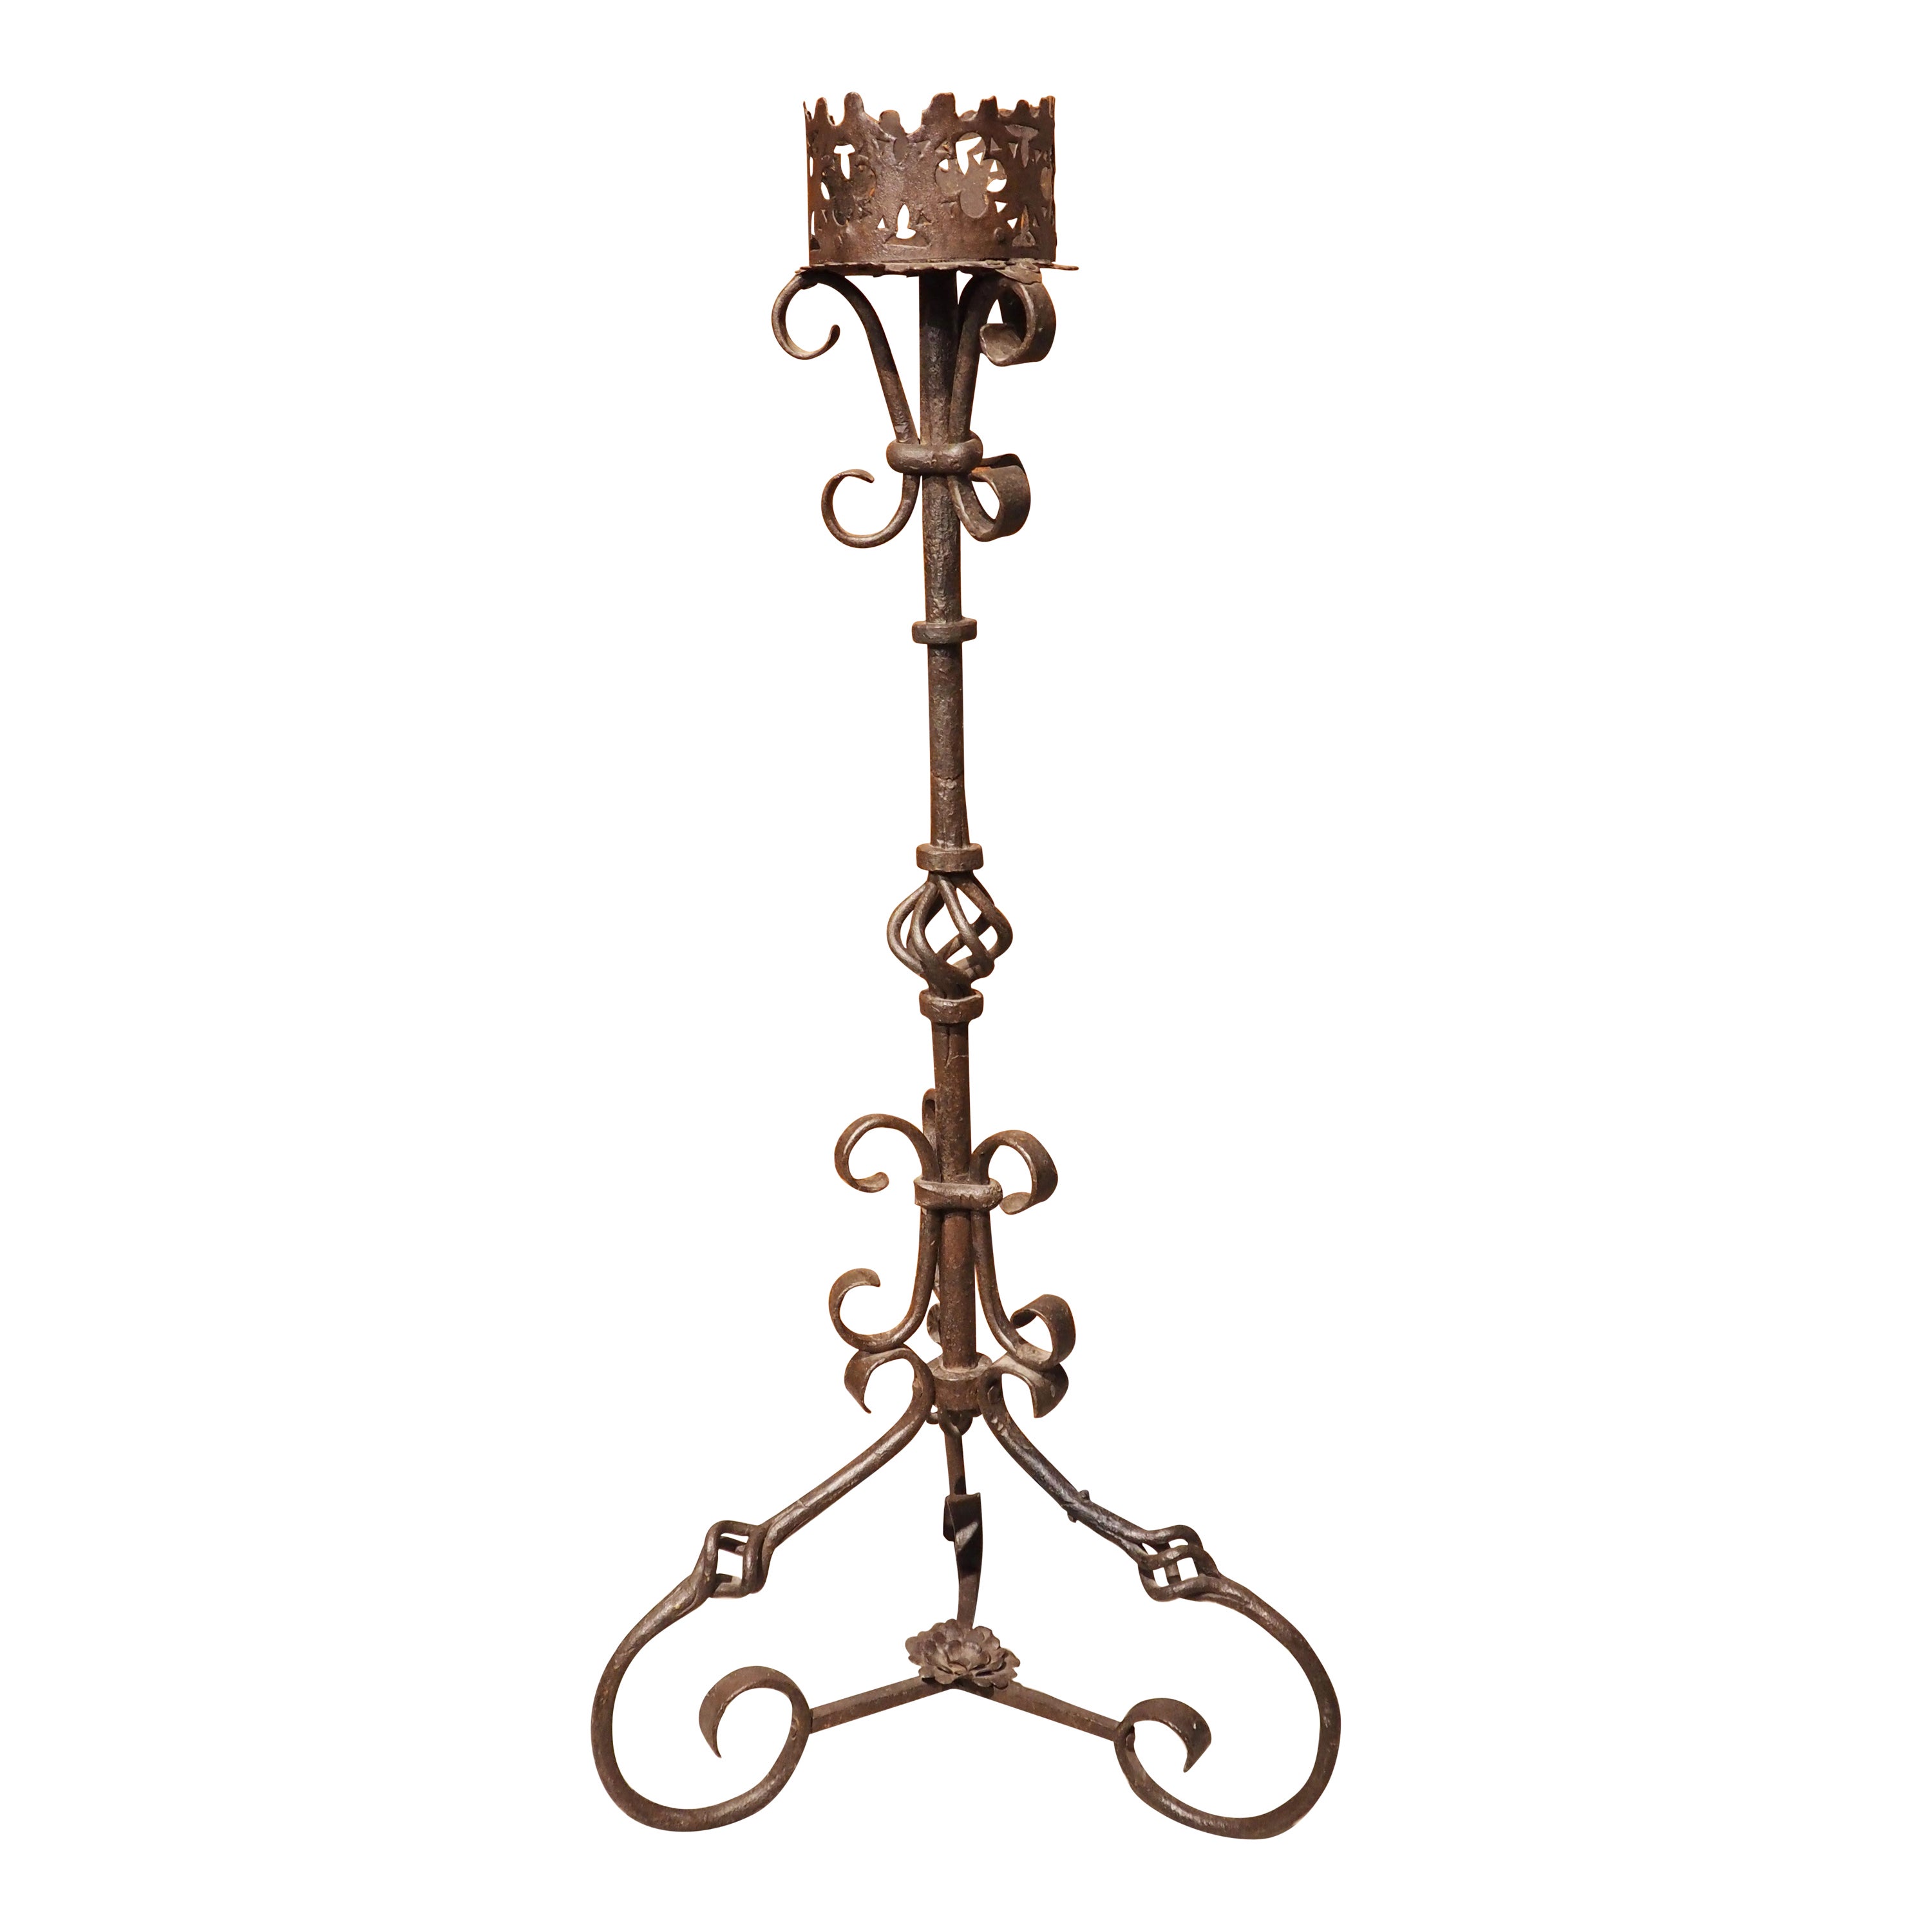 Antique Wrought Iron Spanish Candle Holder, Circa 1600